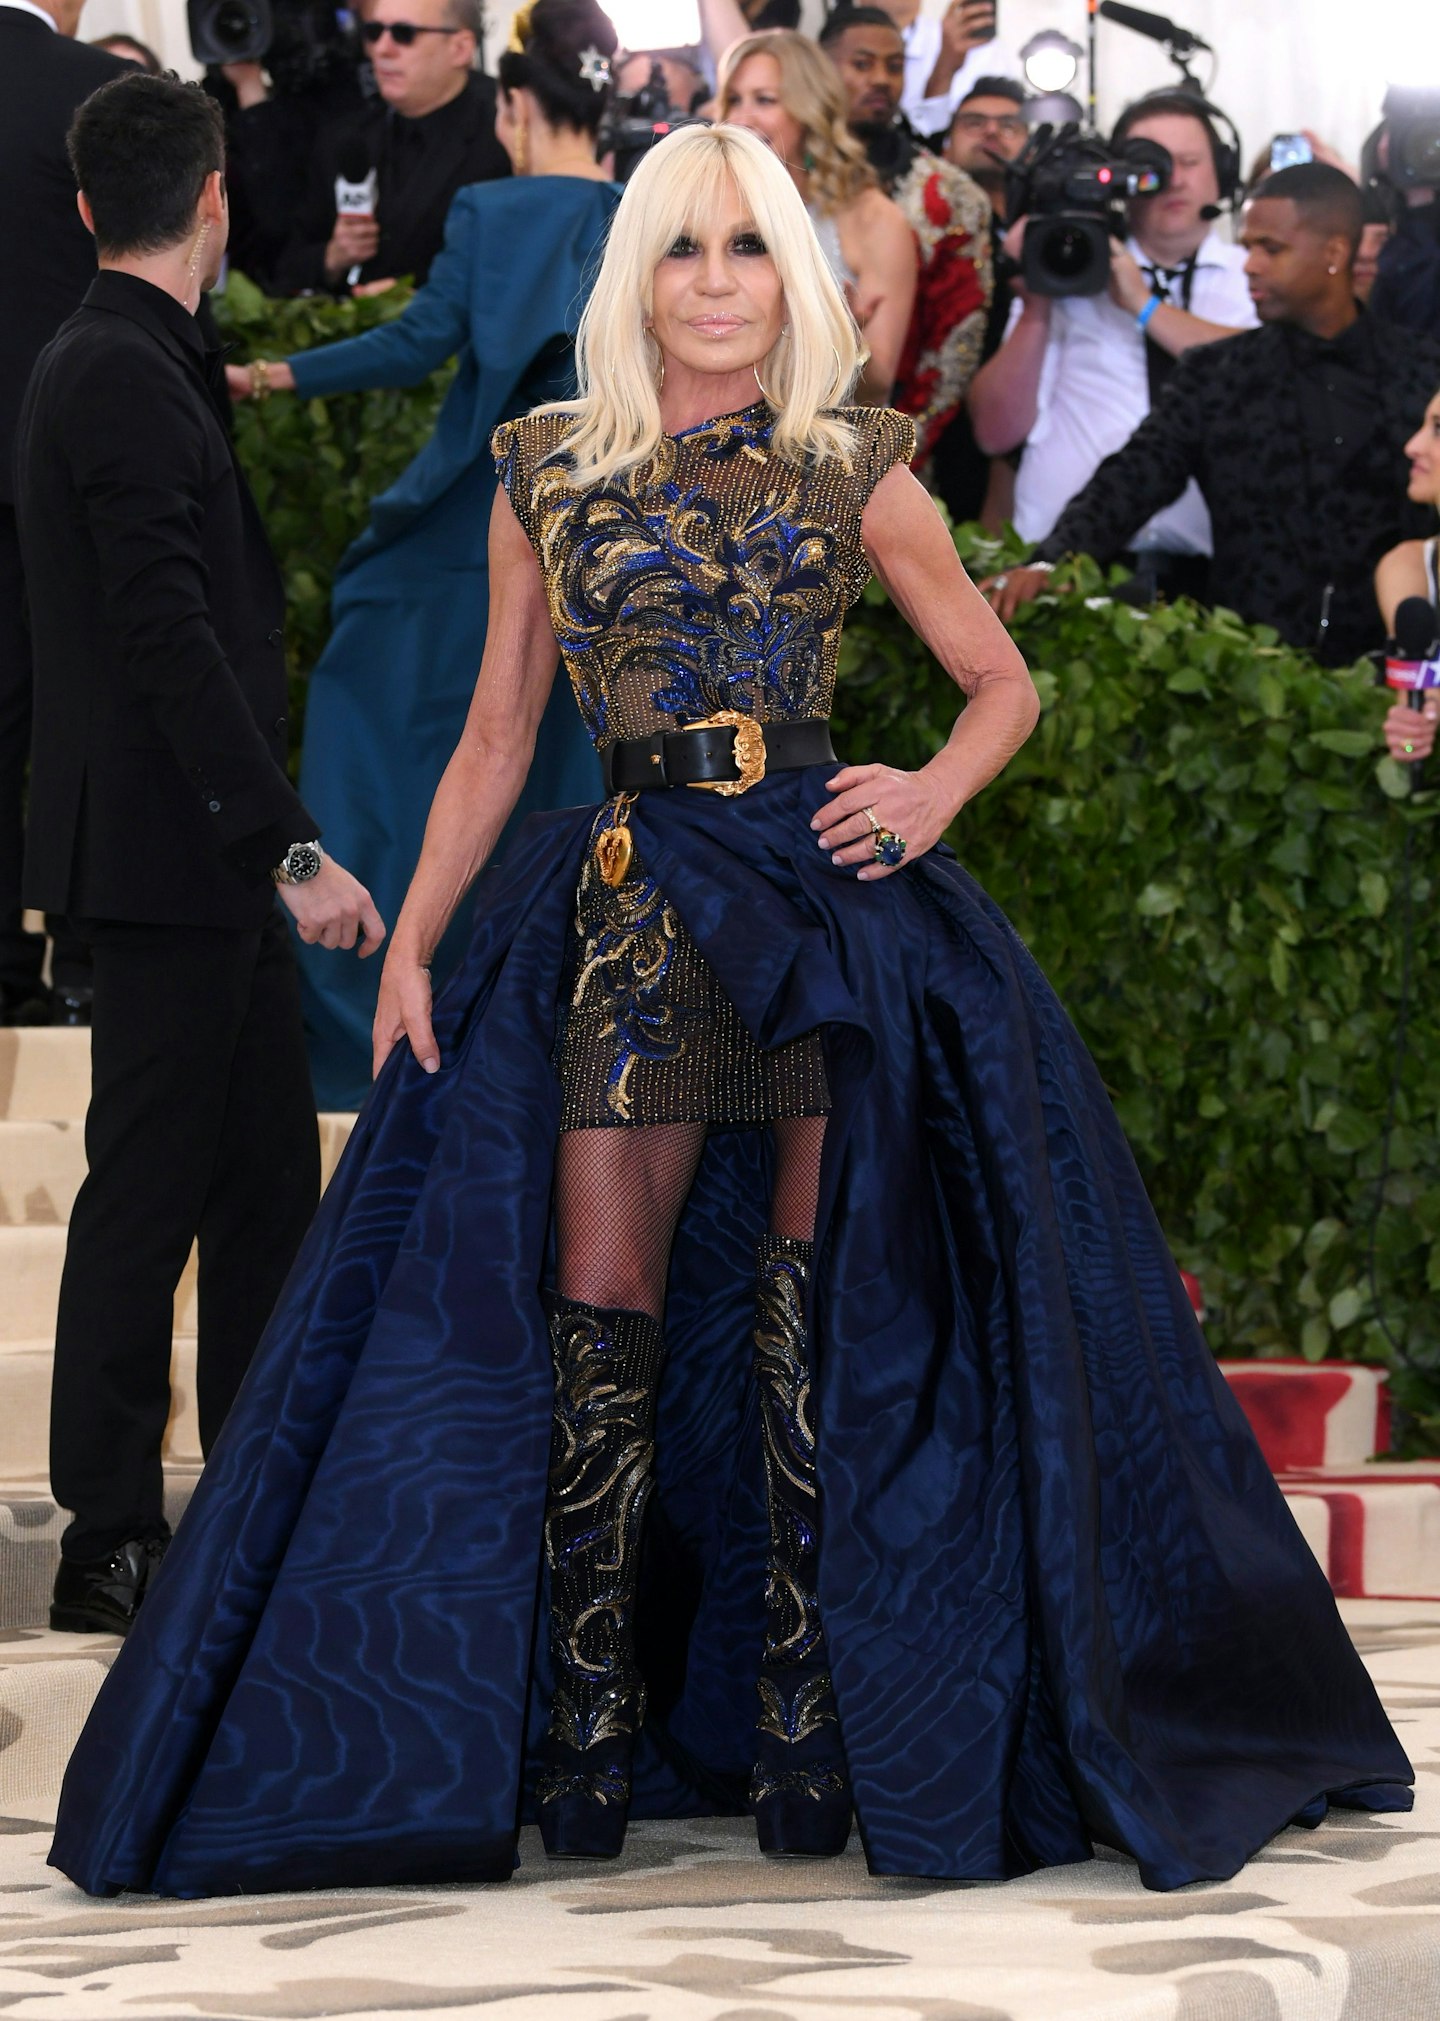 Donatella Versace thanks Cardi B for 'amazing birthday present' at Met Gala